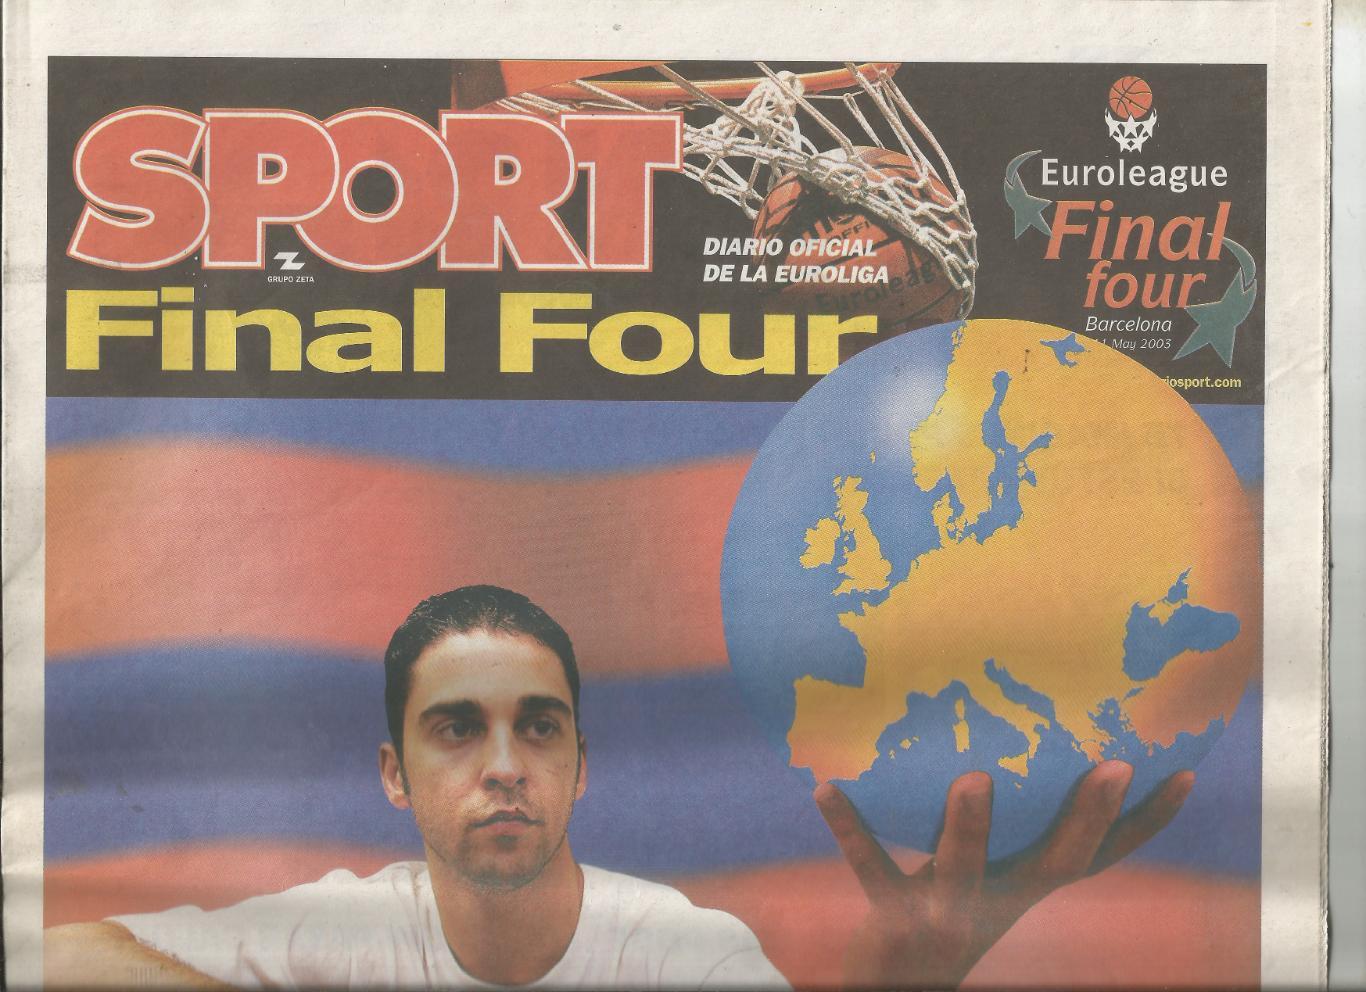 2003 Баскетбол ЦСКА - Барселона - Бенетон - Сиена Евролига Финал четырех (11.05)